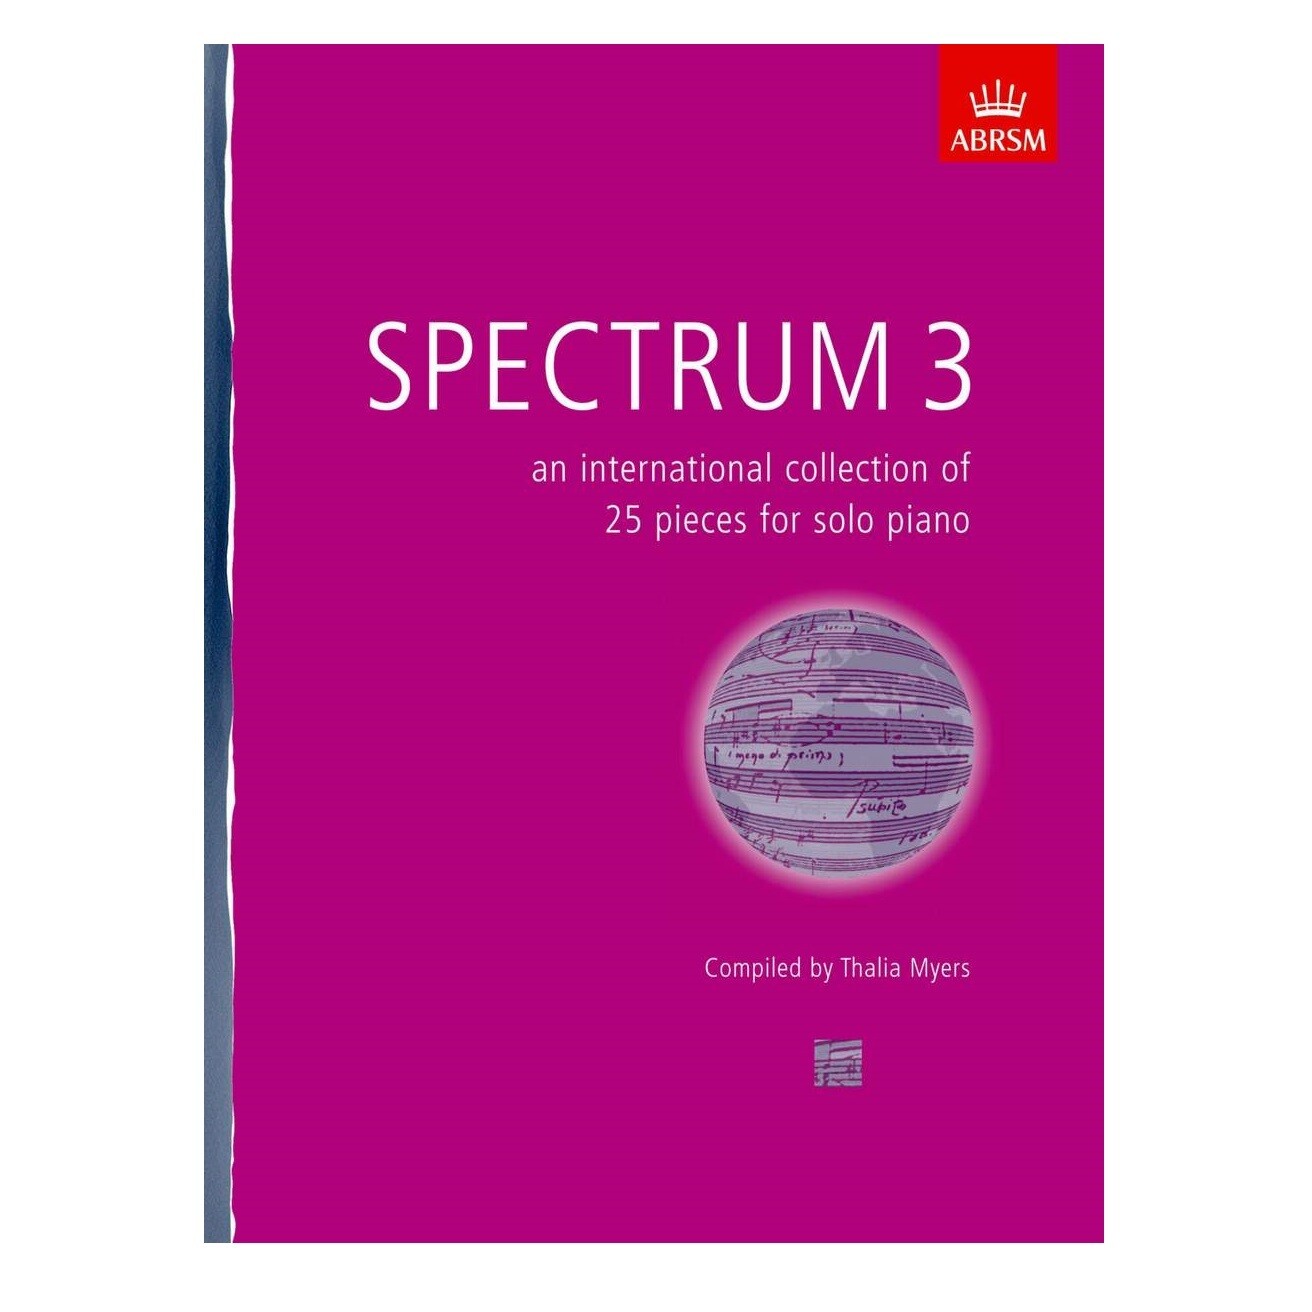 Spectrum 3 (25 Pieces for Solo Piano)